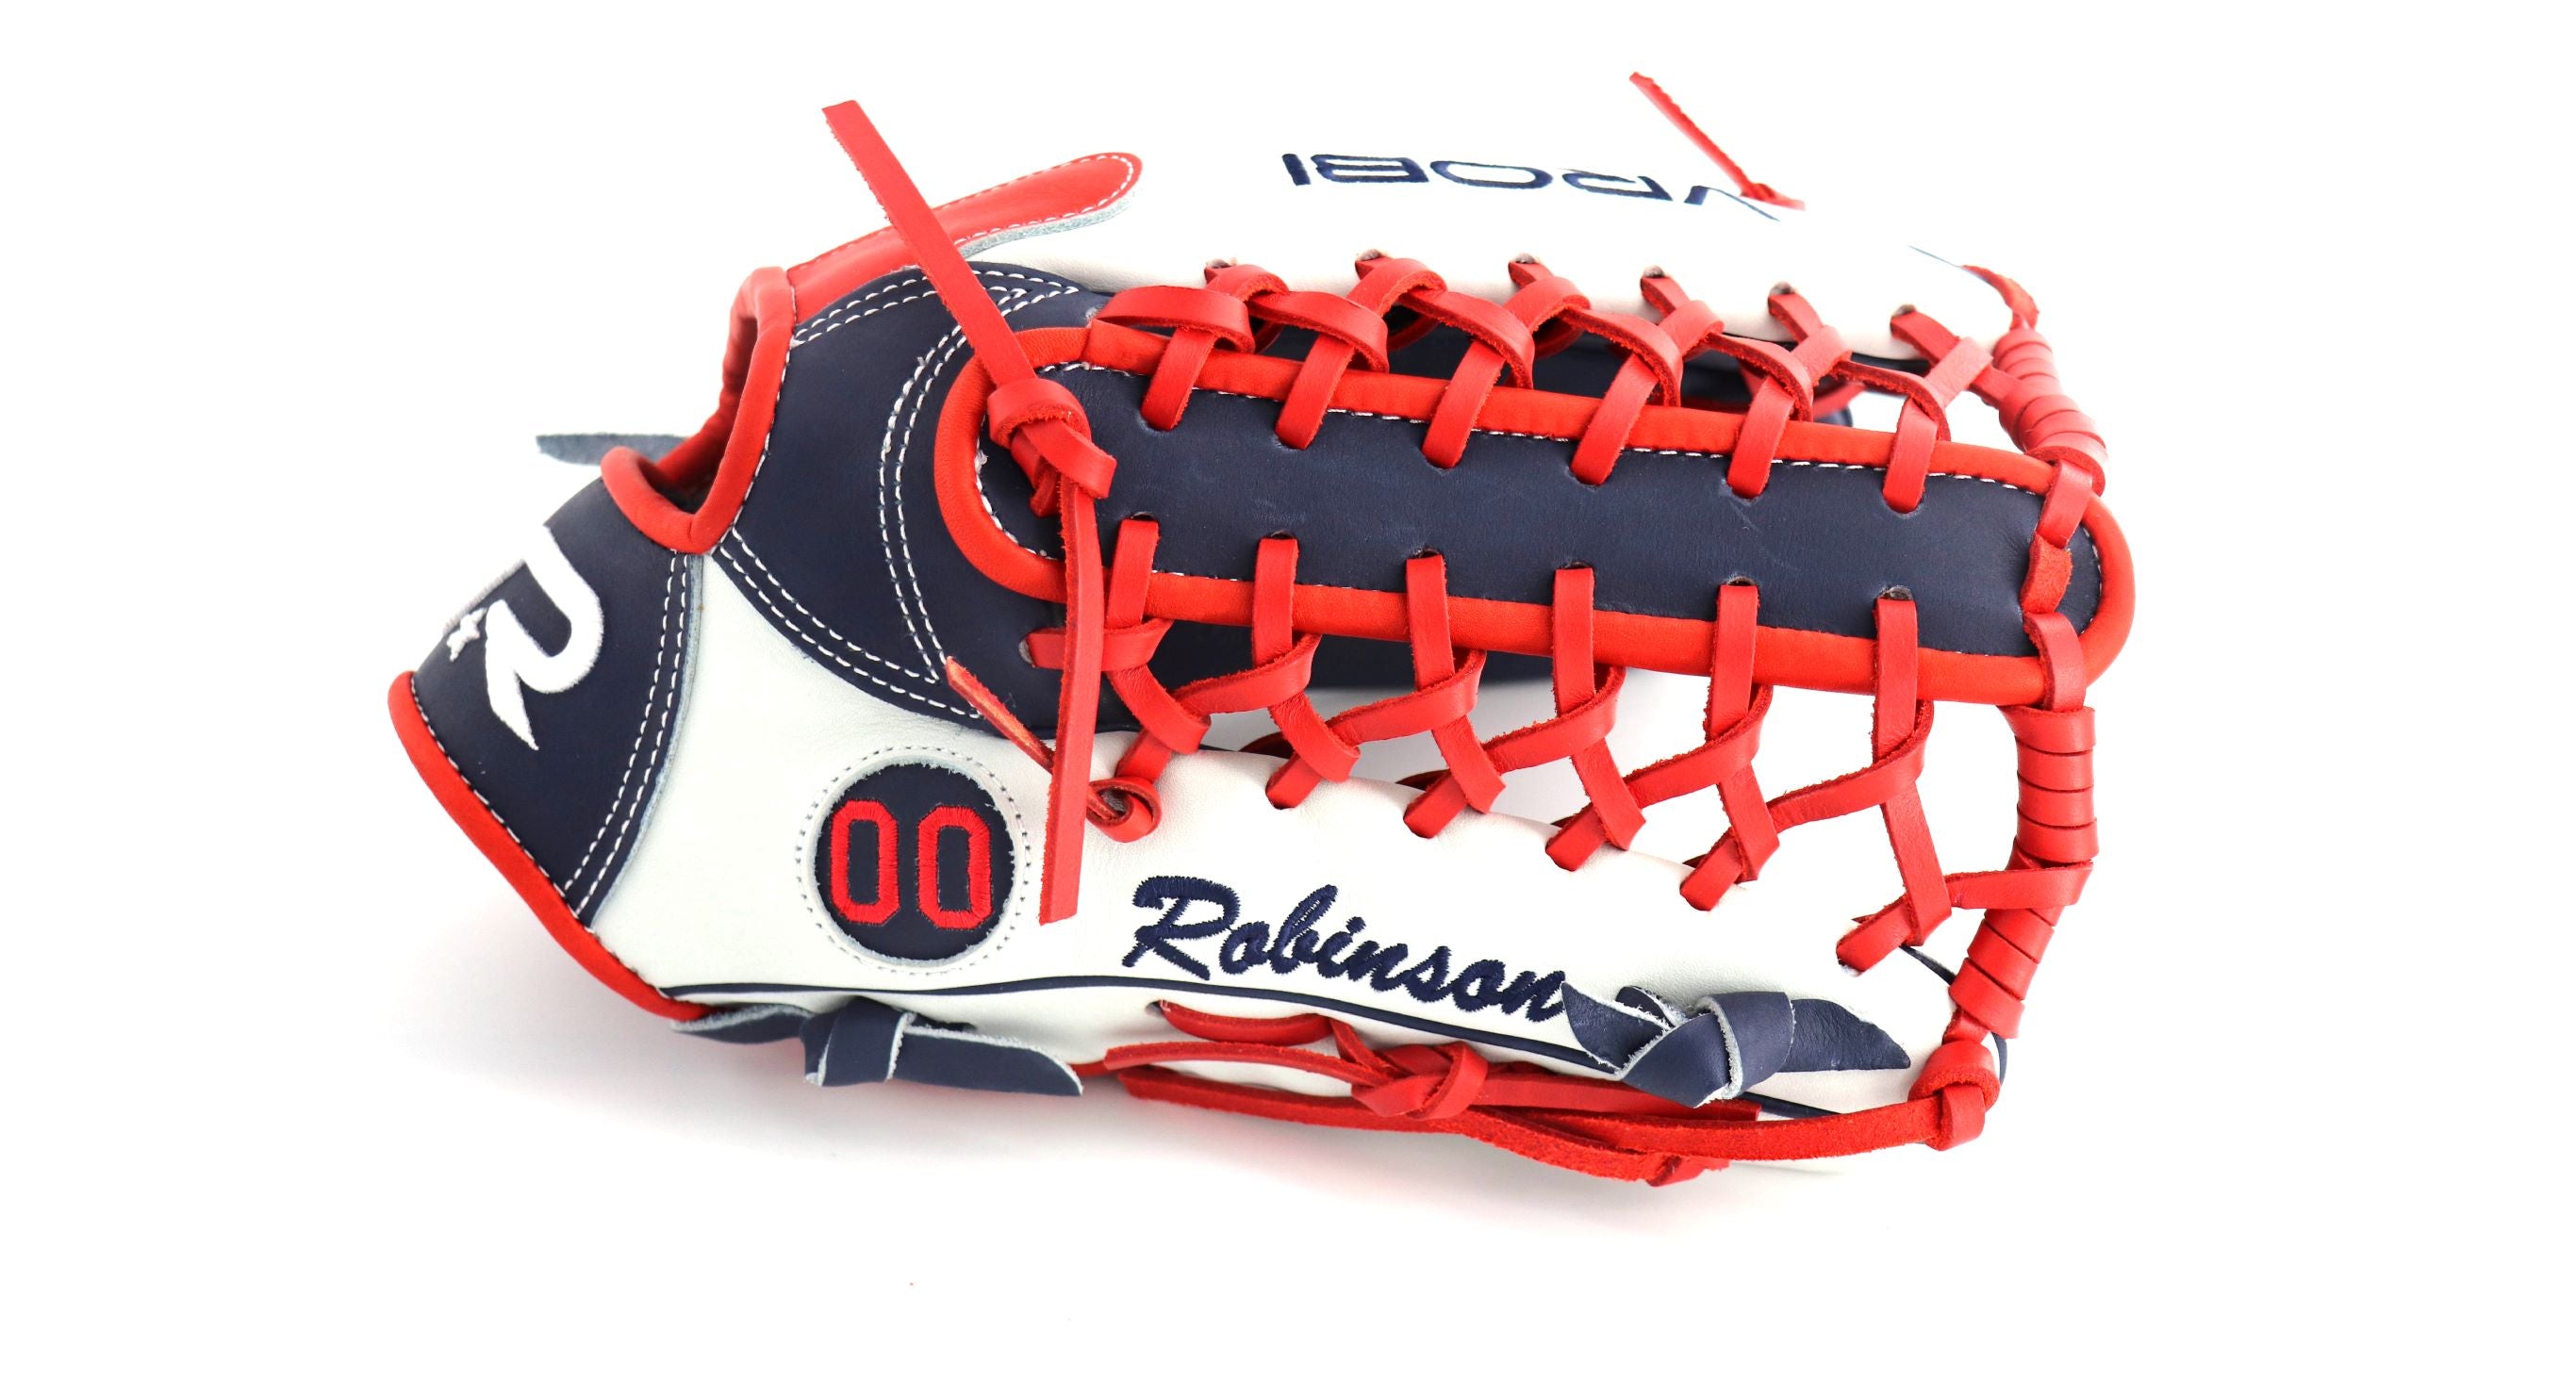 Eqwip Polymer Baseball Glove - Priority Designs